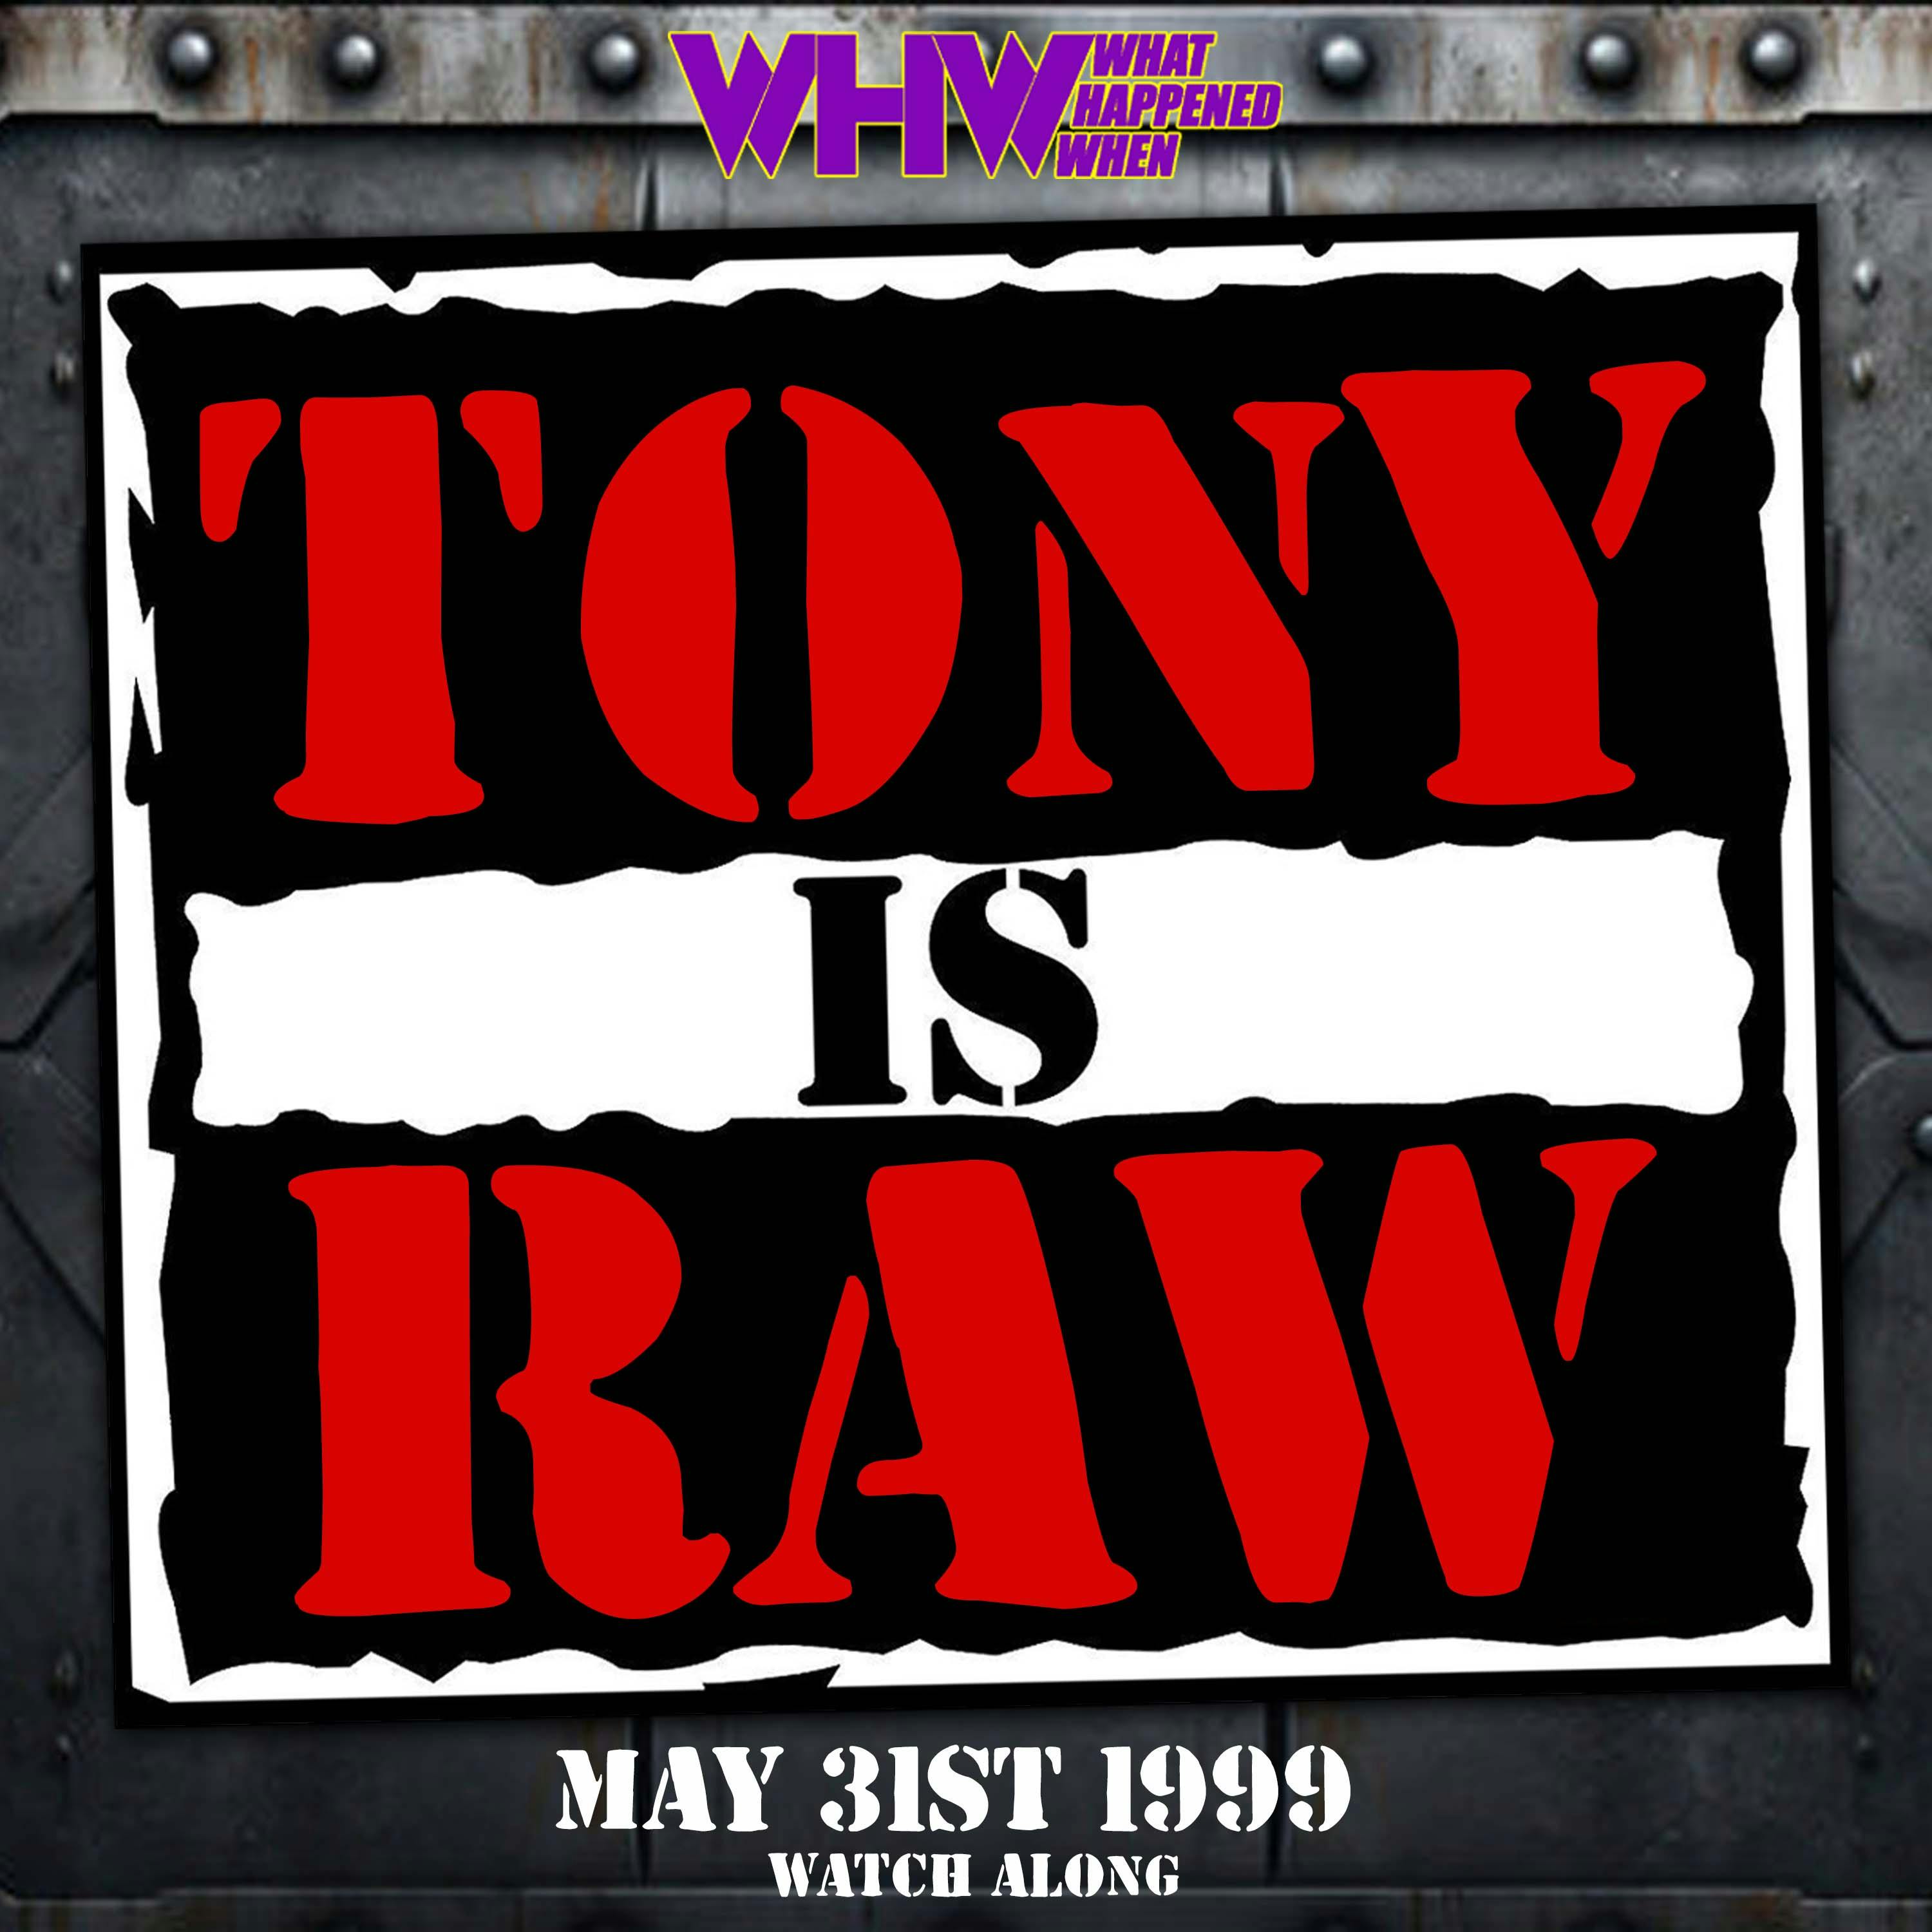 Episode 385: Tony Is RAW 05.31.99 Watch Along